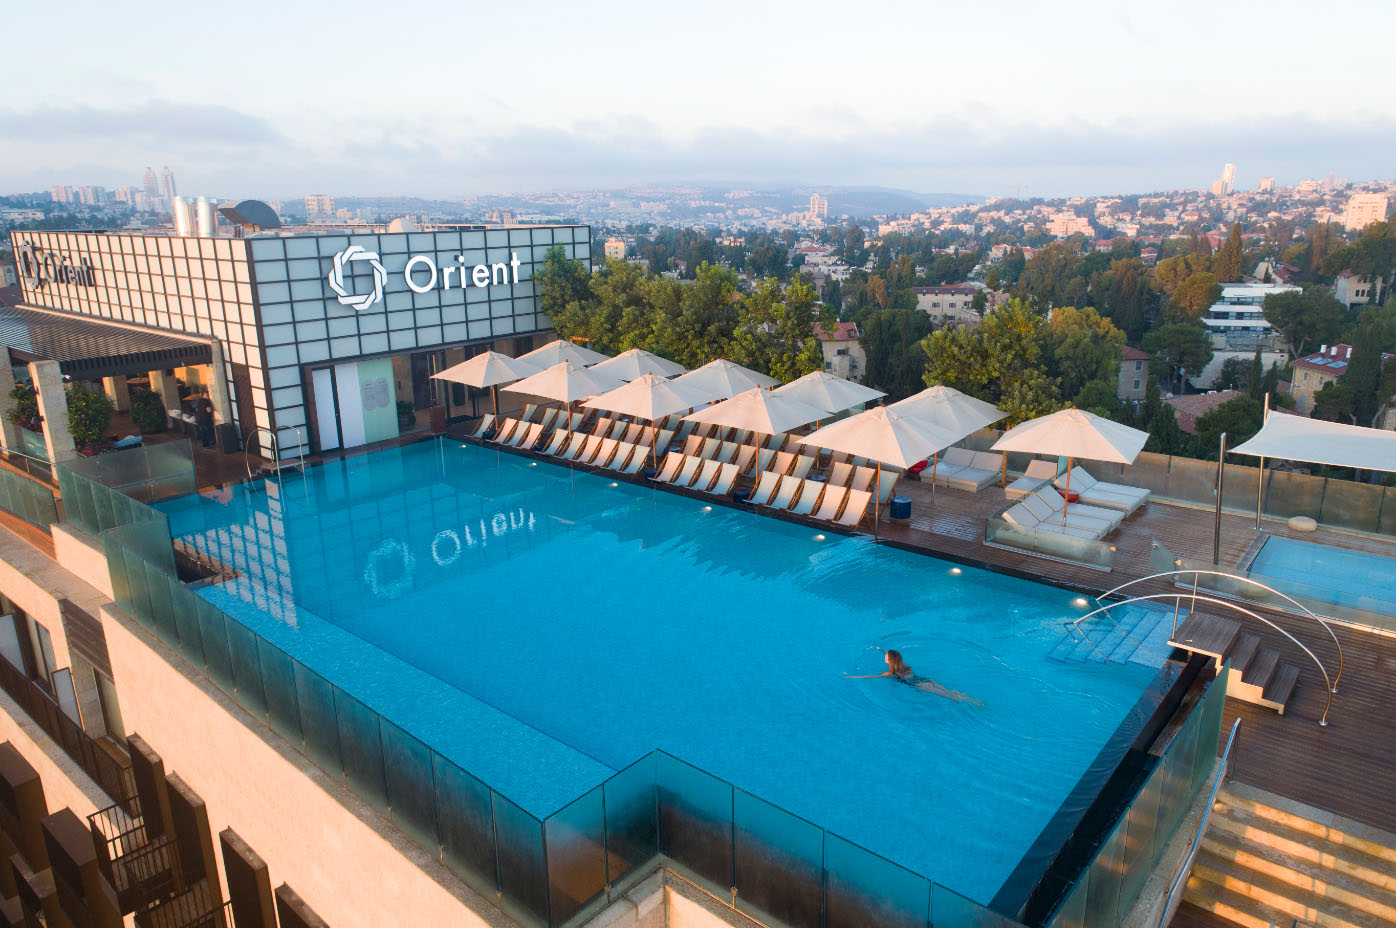 Orient roof-top pool